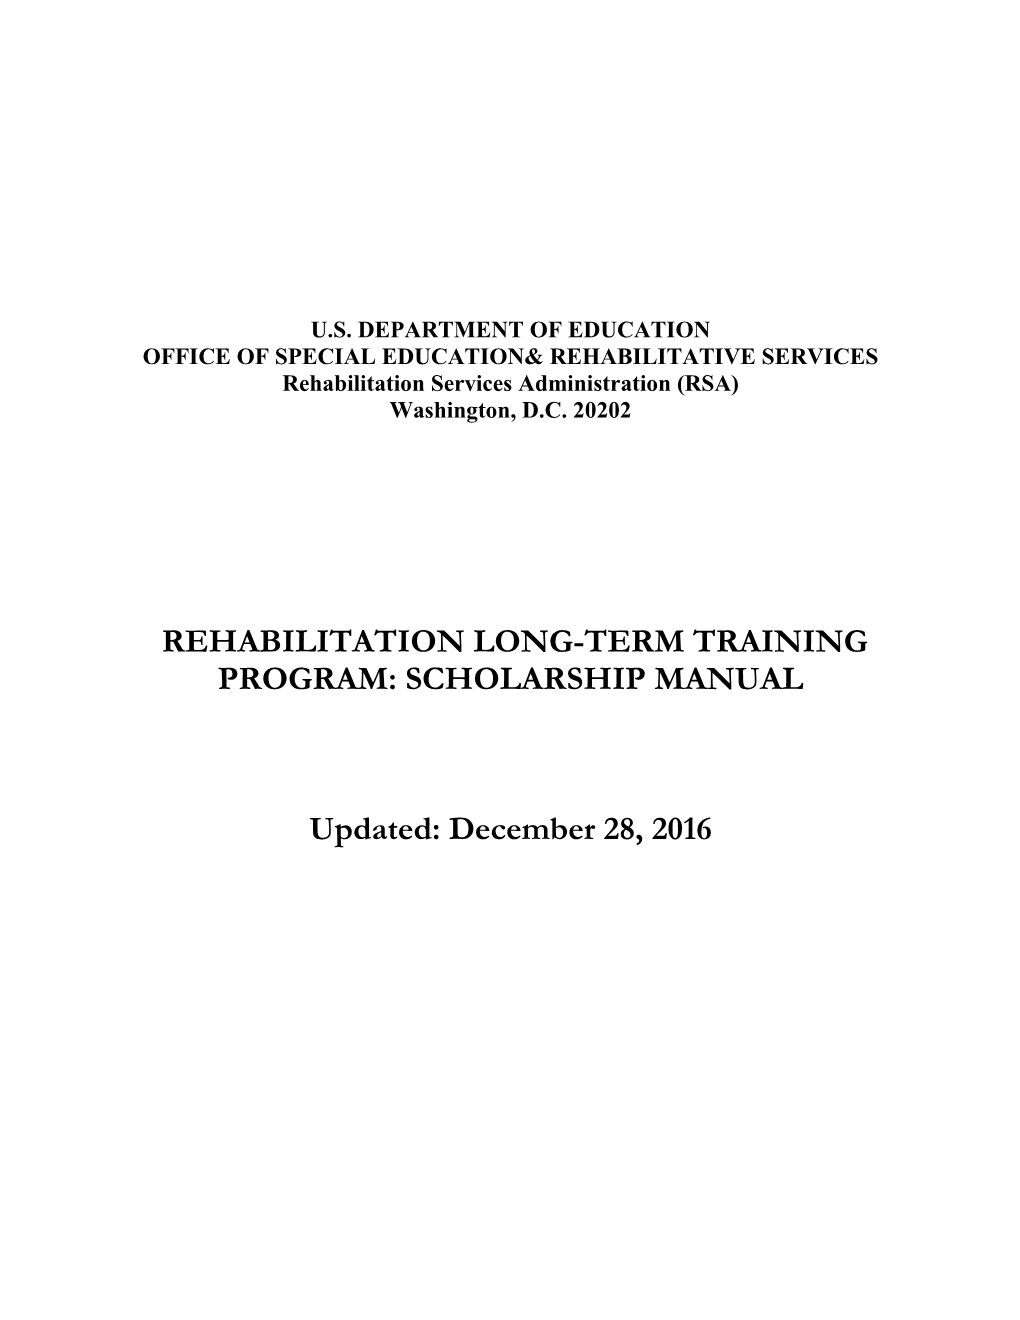 Rehabilitation Long-Term Training Program: Scholarship Manual